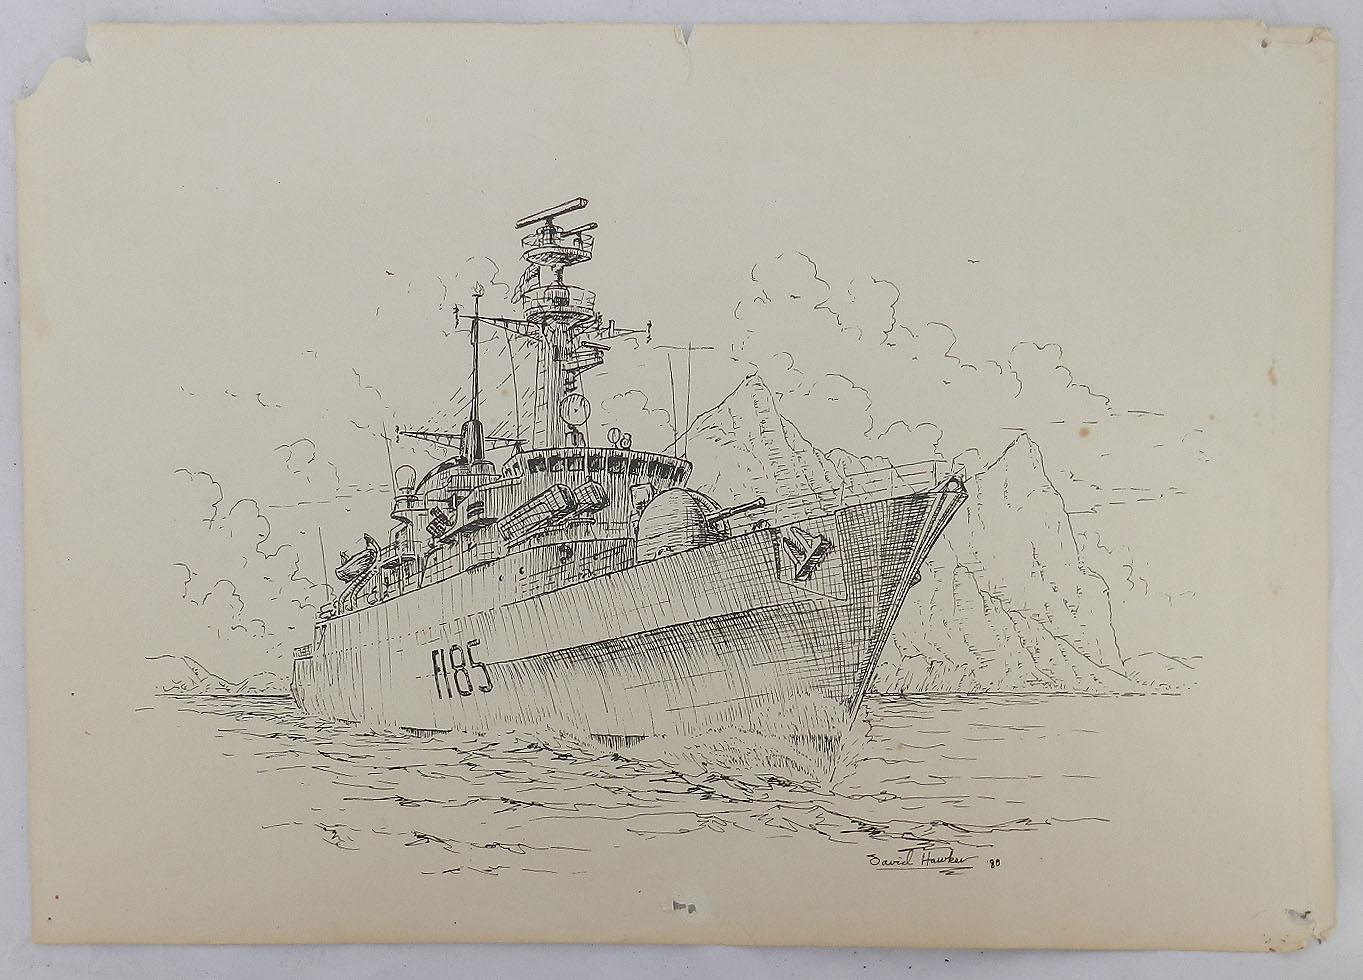 War Ship Painting Ink by David Hawker '80 - Gray Landscape Art by David Hacker